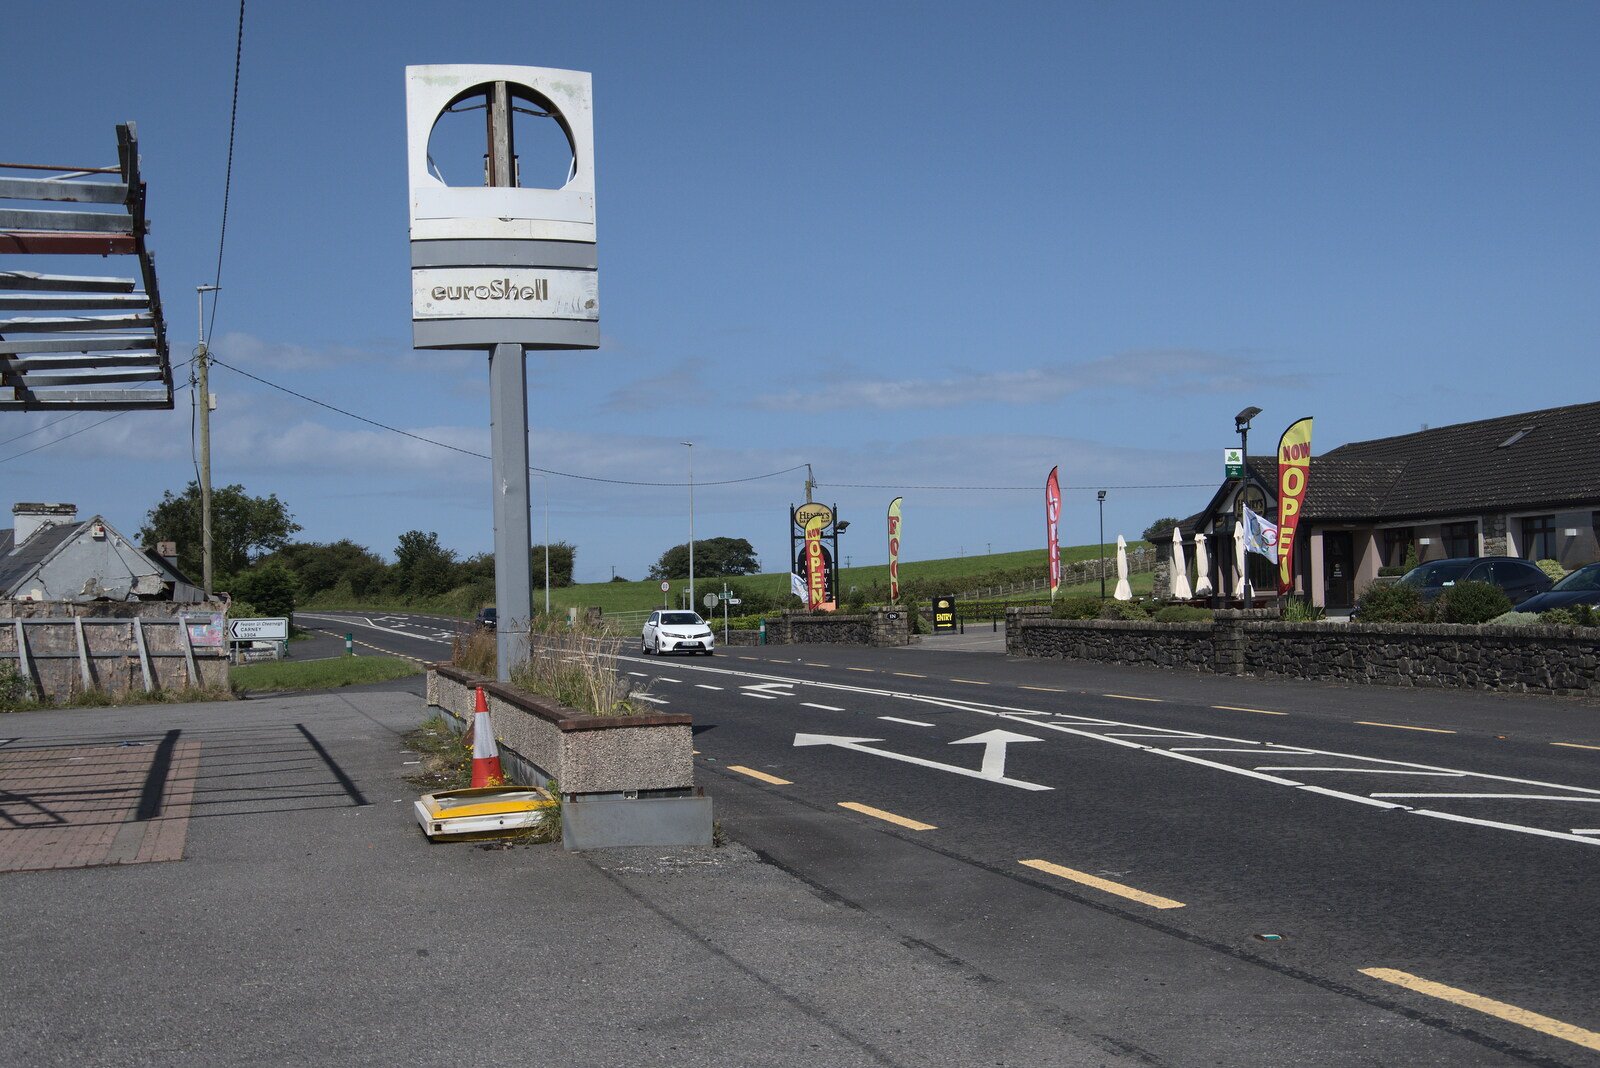 A Trip to Manorhamilton, County Leitrim, Ireland - 11th August 2021: euroShell sign on the Wild Atlantic Way road